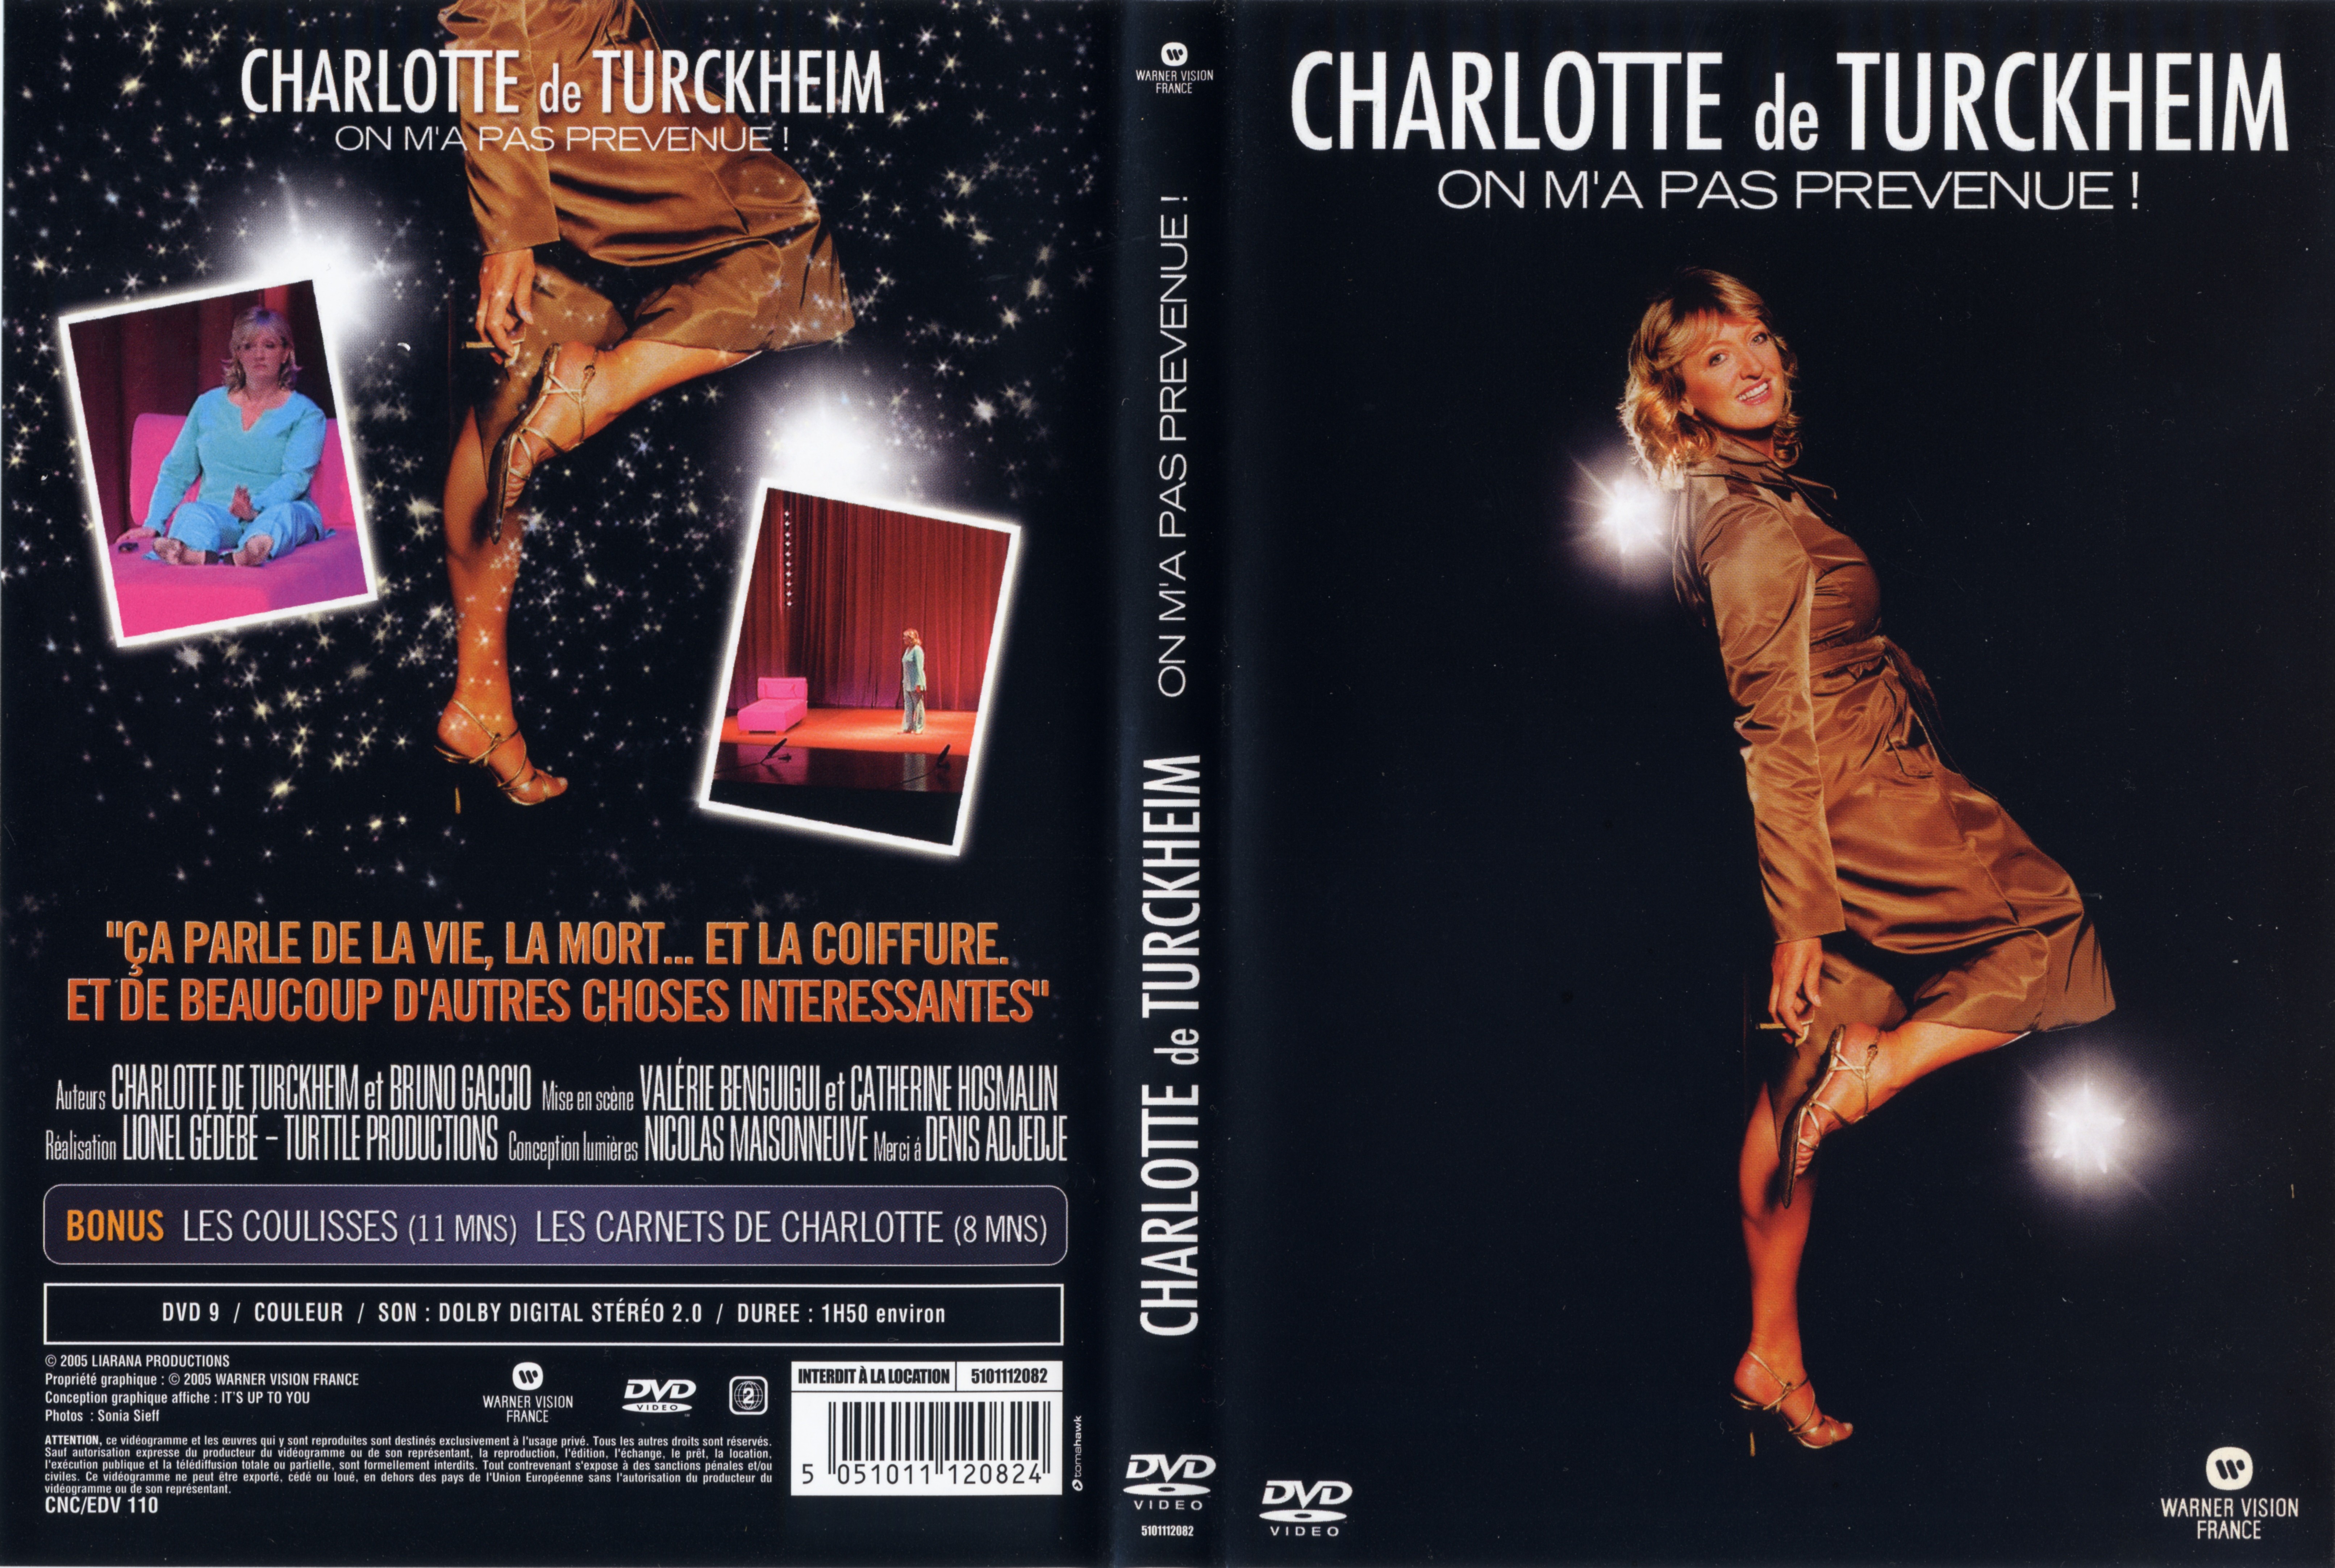 Jaquette DVD Charlotte de Turckheim - On m